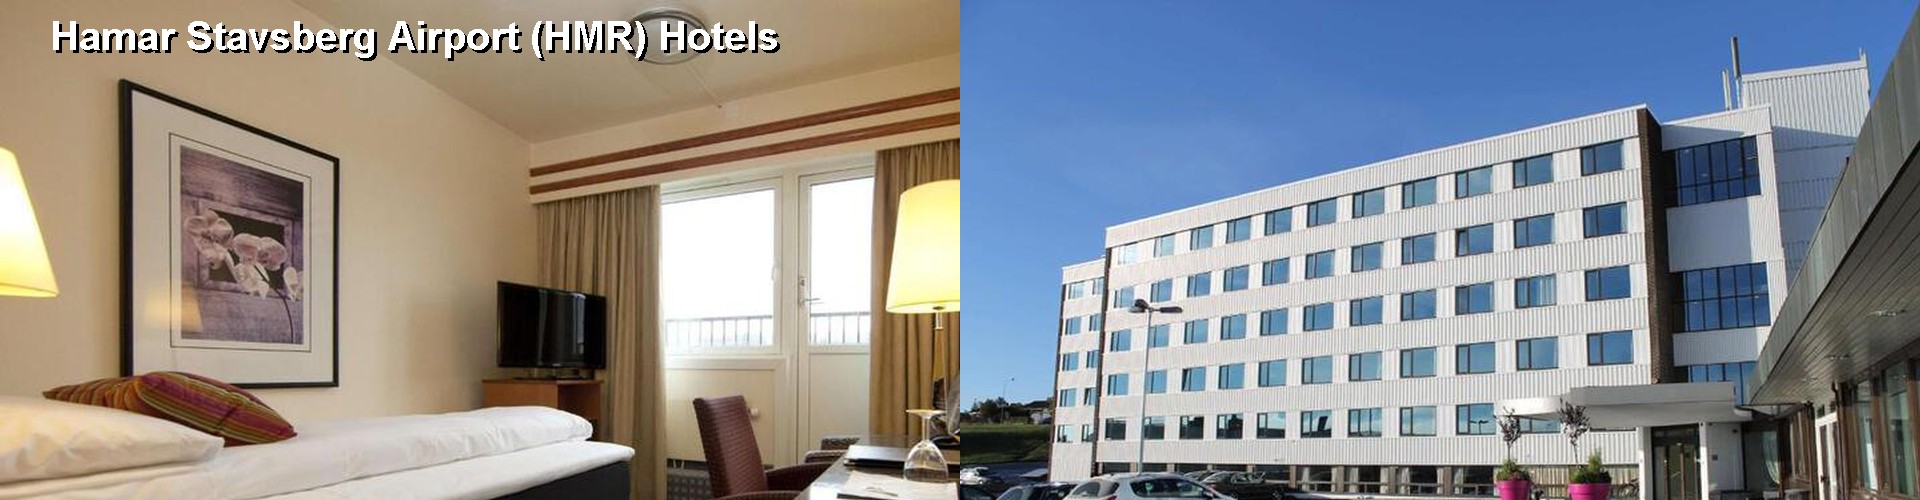 5 Best Hotels near Hamar Stavsberg Airport (HMR)